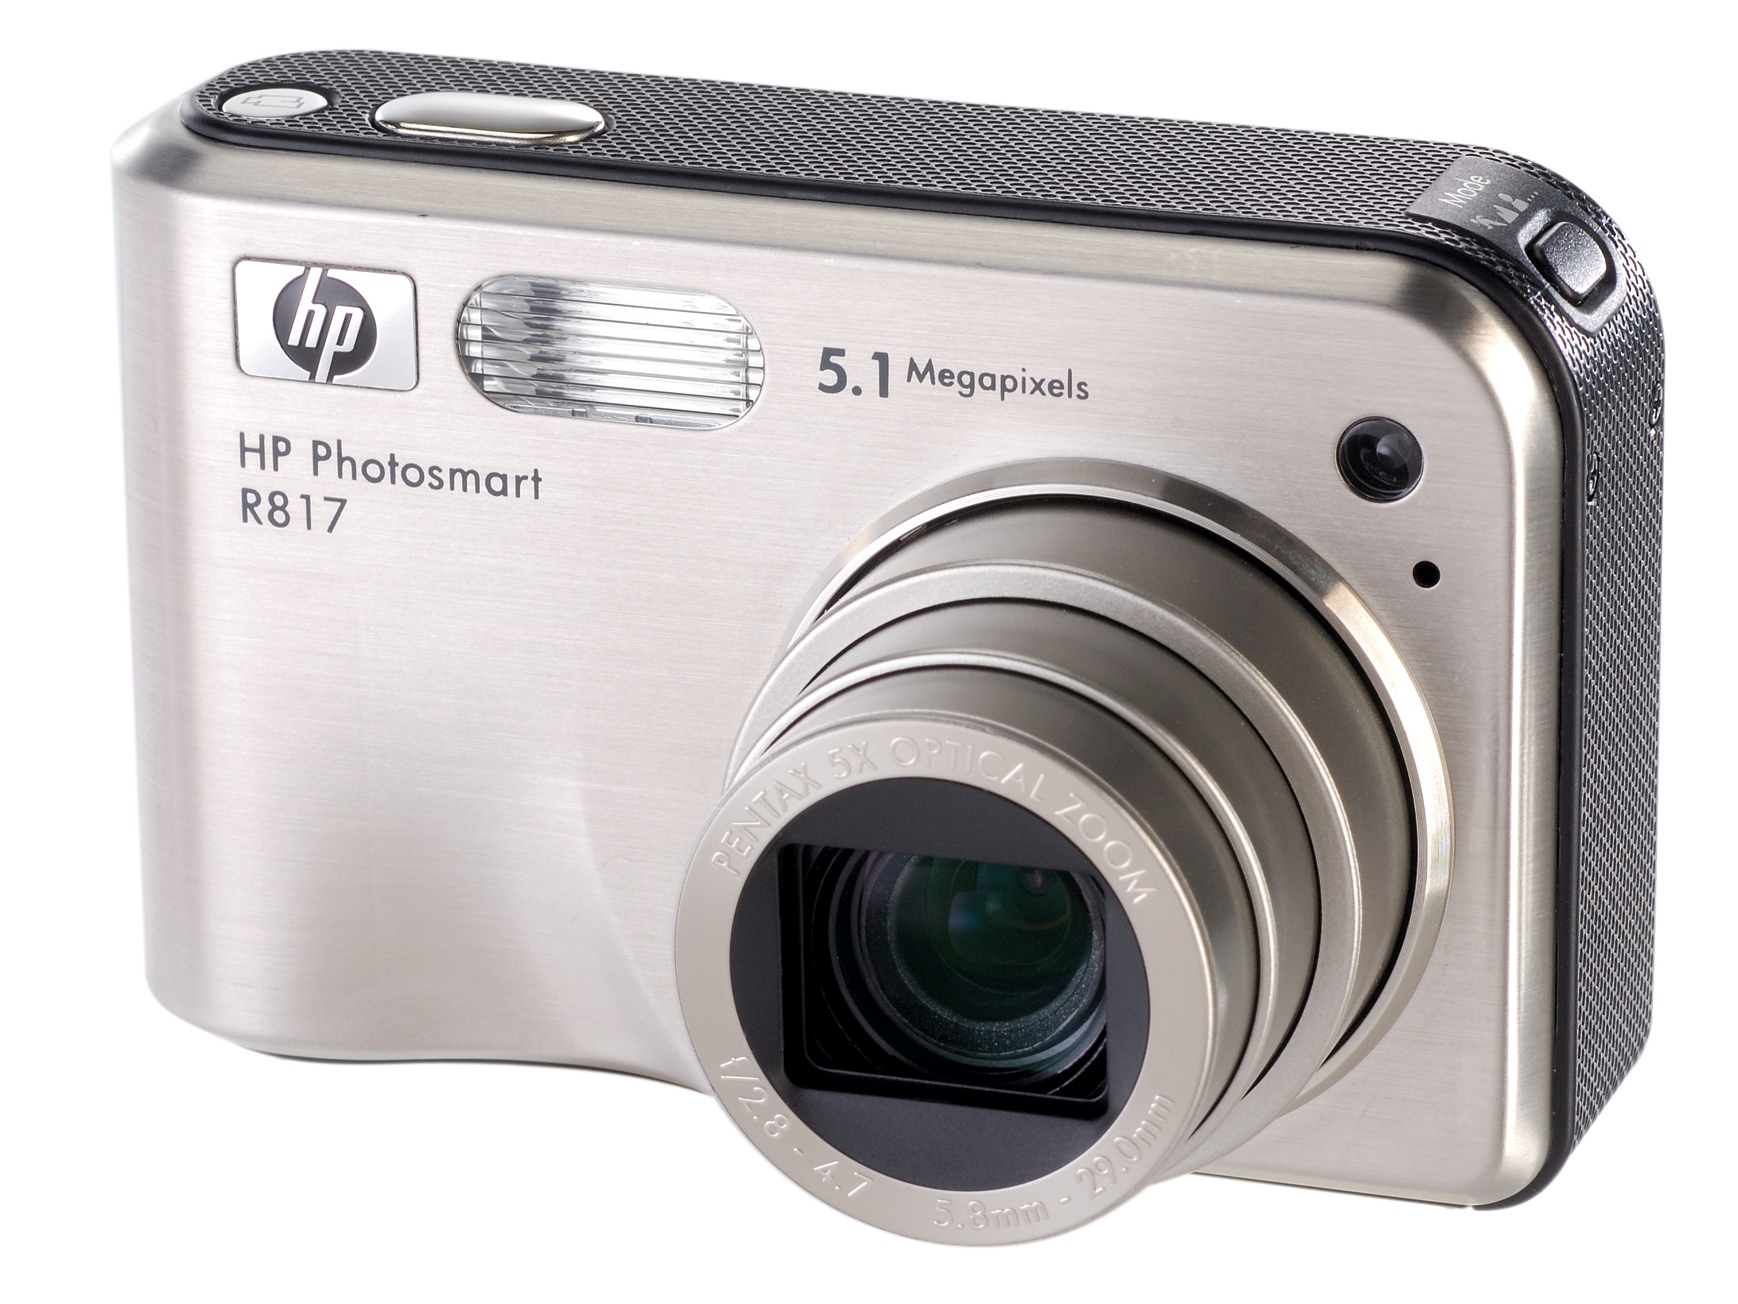 Updated: HP stops making digital cameras | TechRadar